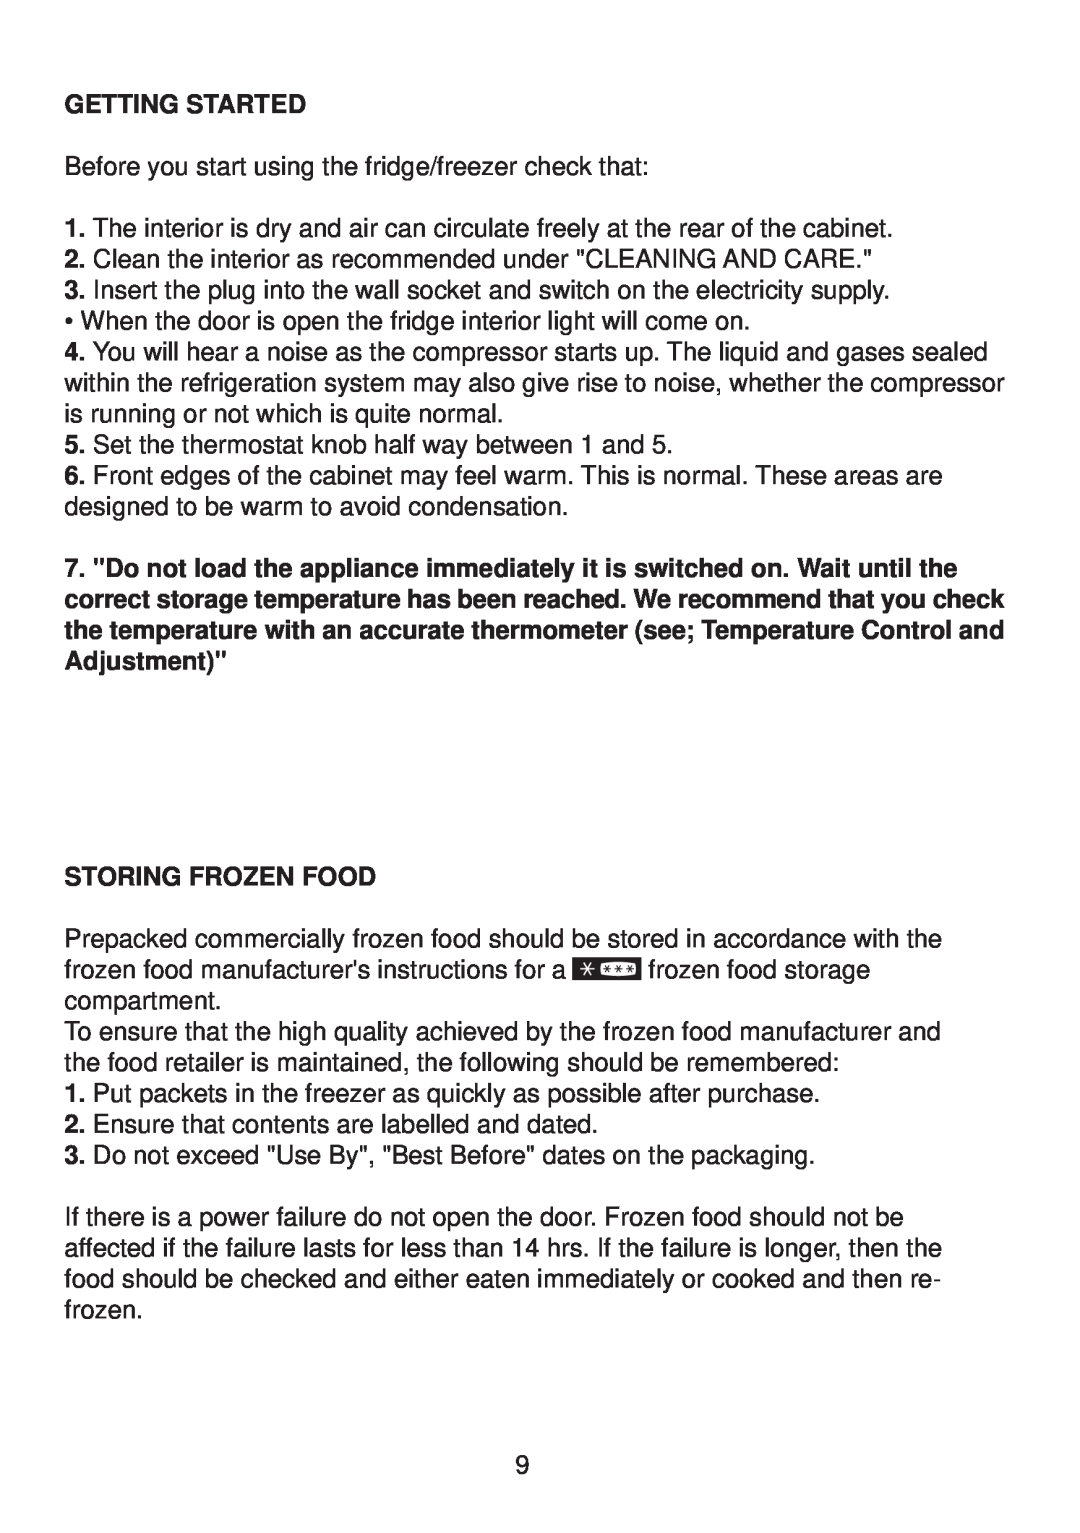 Glen Dimplex Home Appliances Ltd IFF5050 manual Getting Started, Storing Frozen Food 